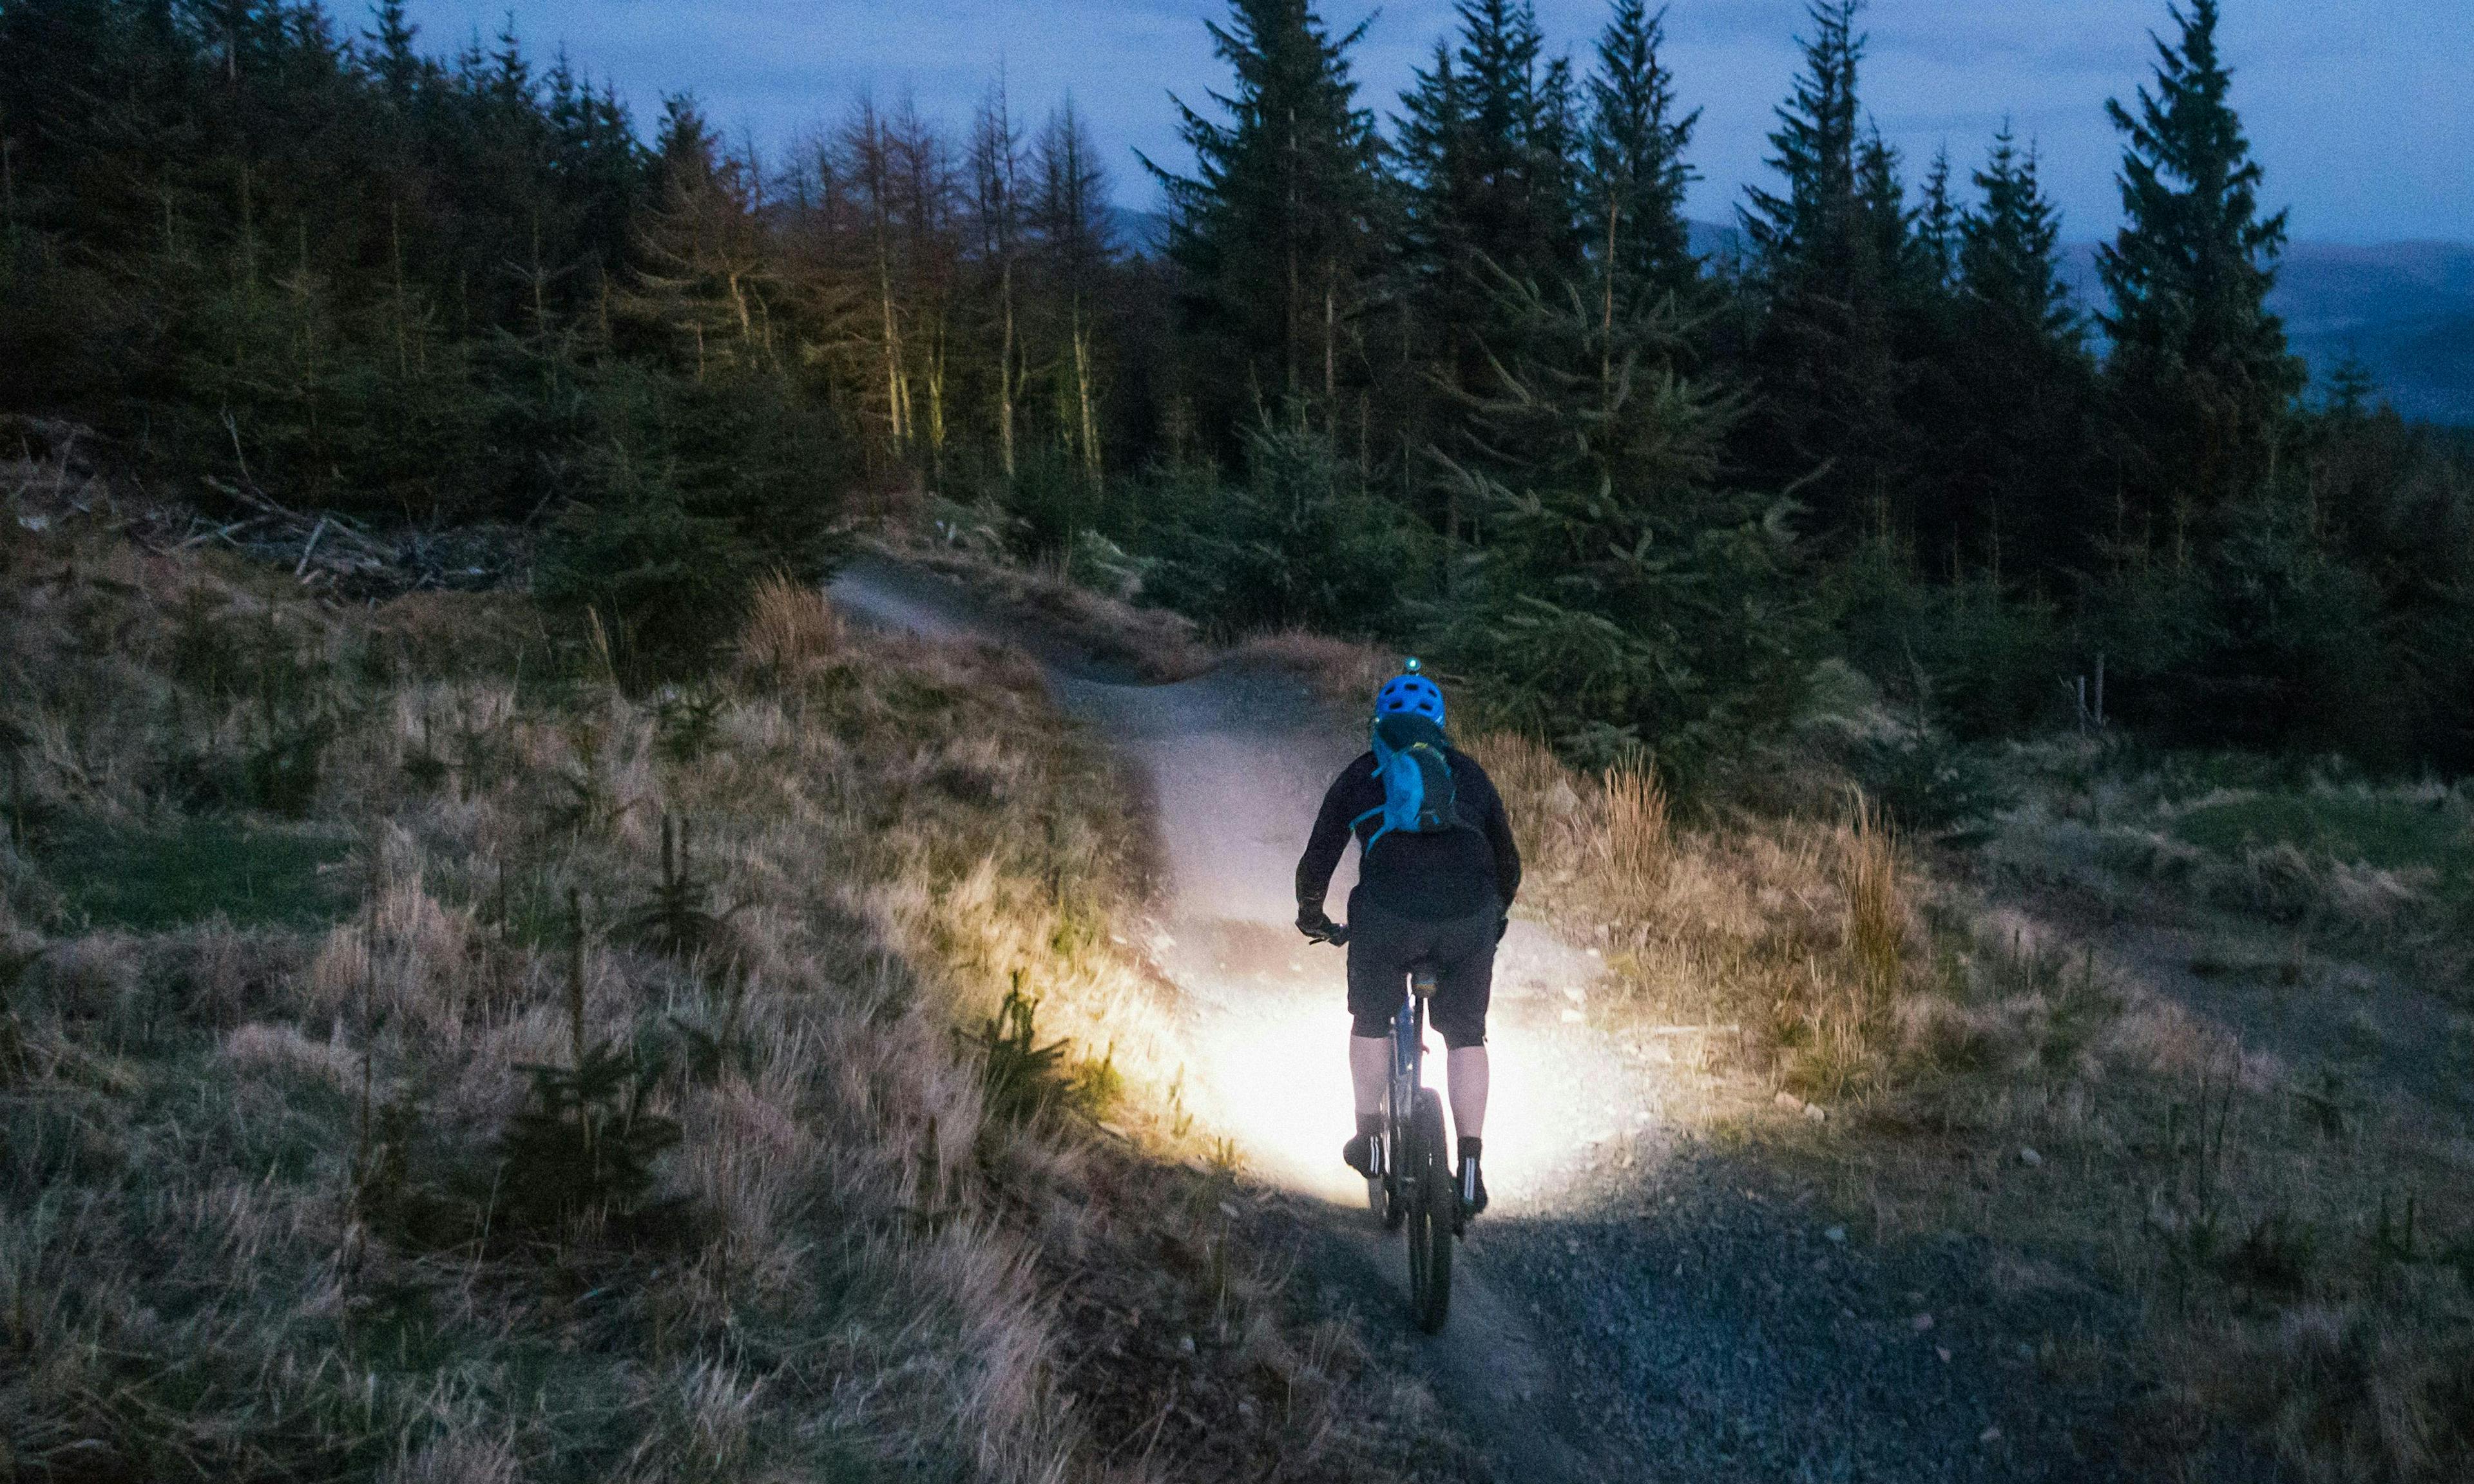 Mountain biking at night with headlamp